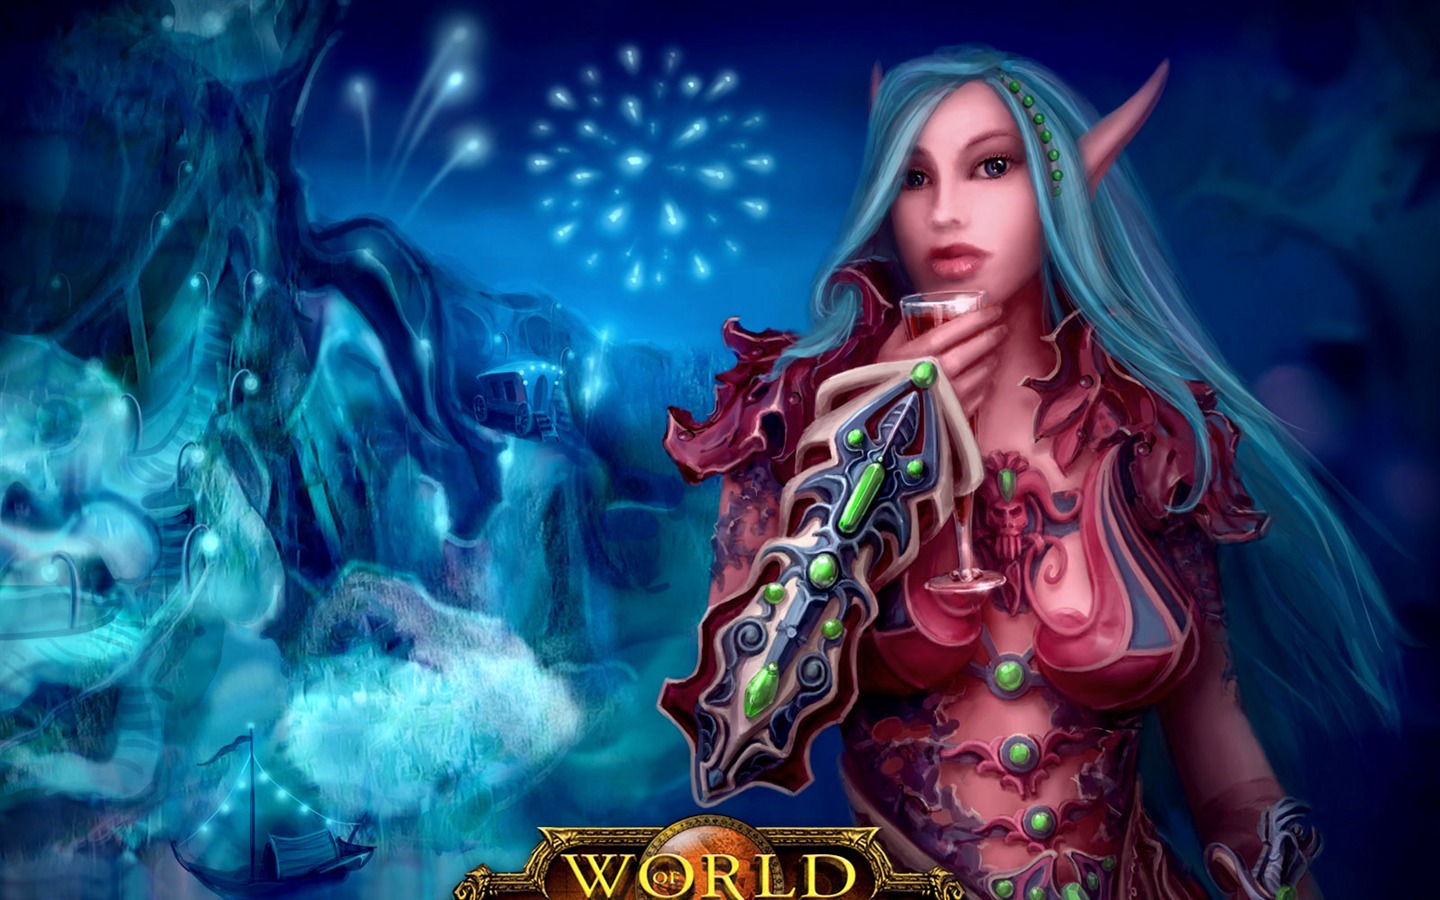 World of Warcraft 魔兽世界高清壁纸(二)15 - 1440x900